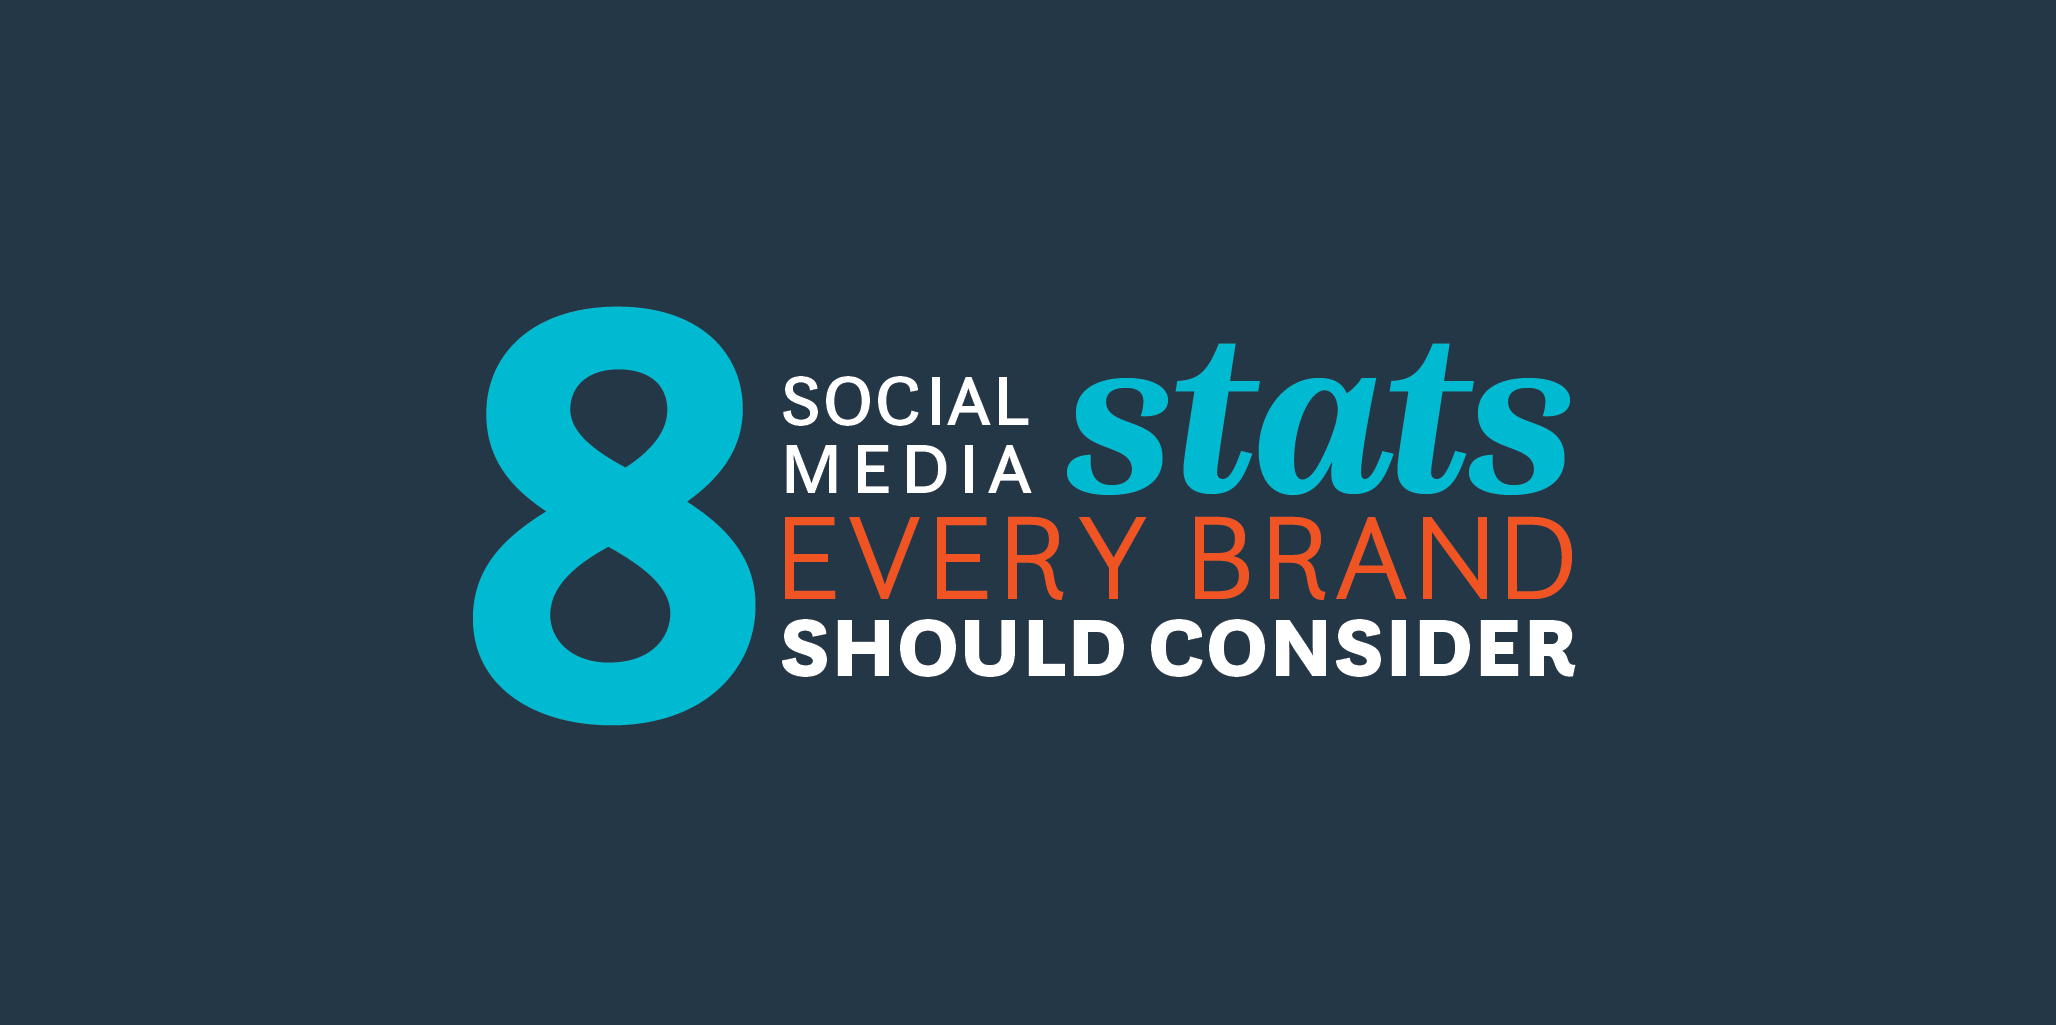 8 Social Media Statistics Every Brand Should Consider